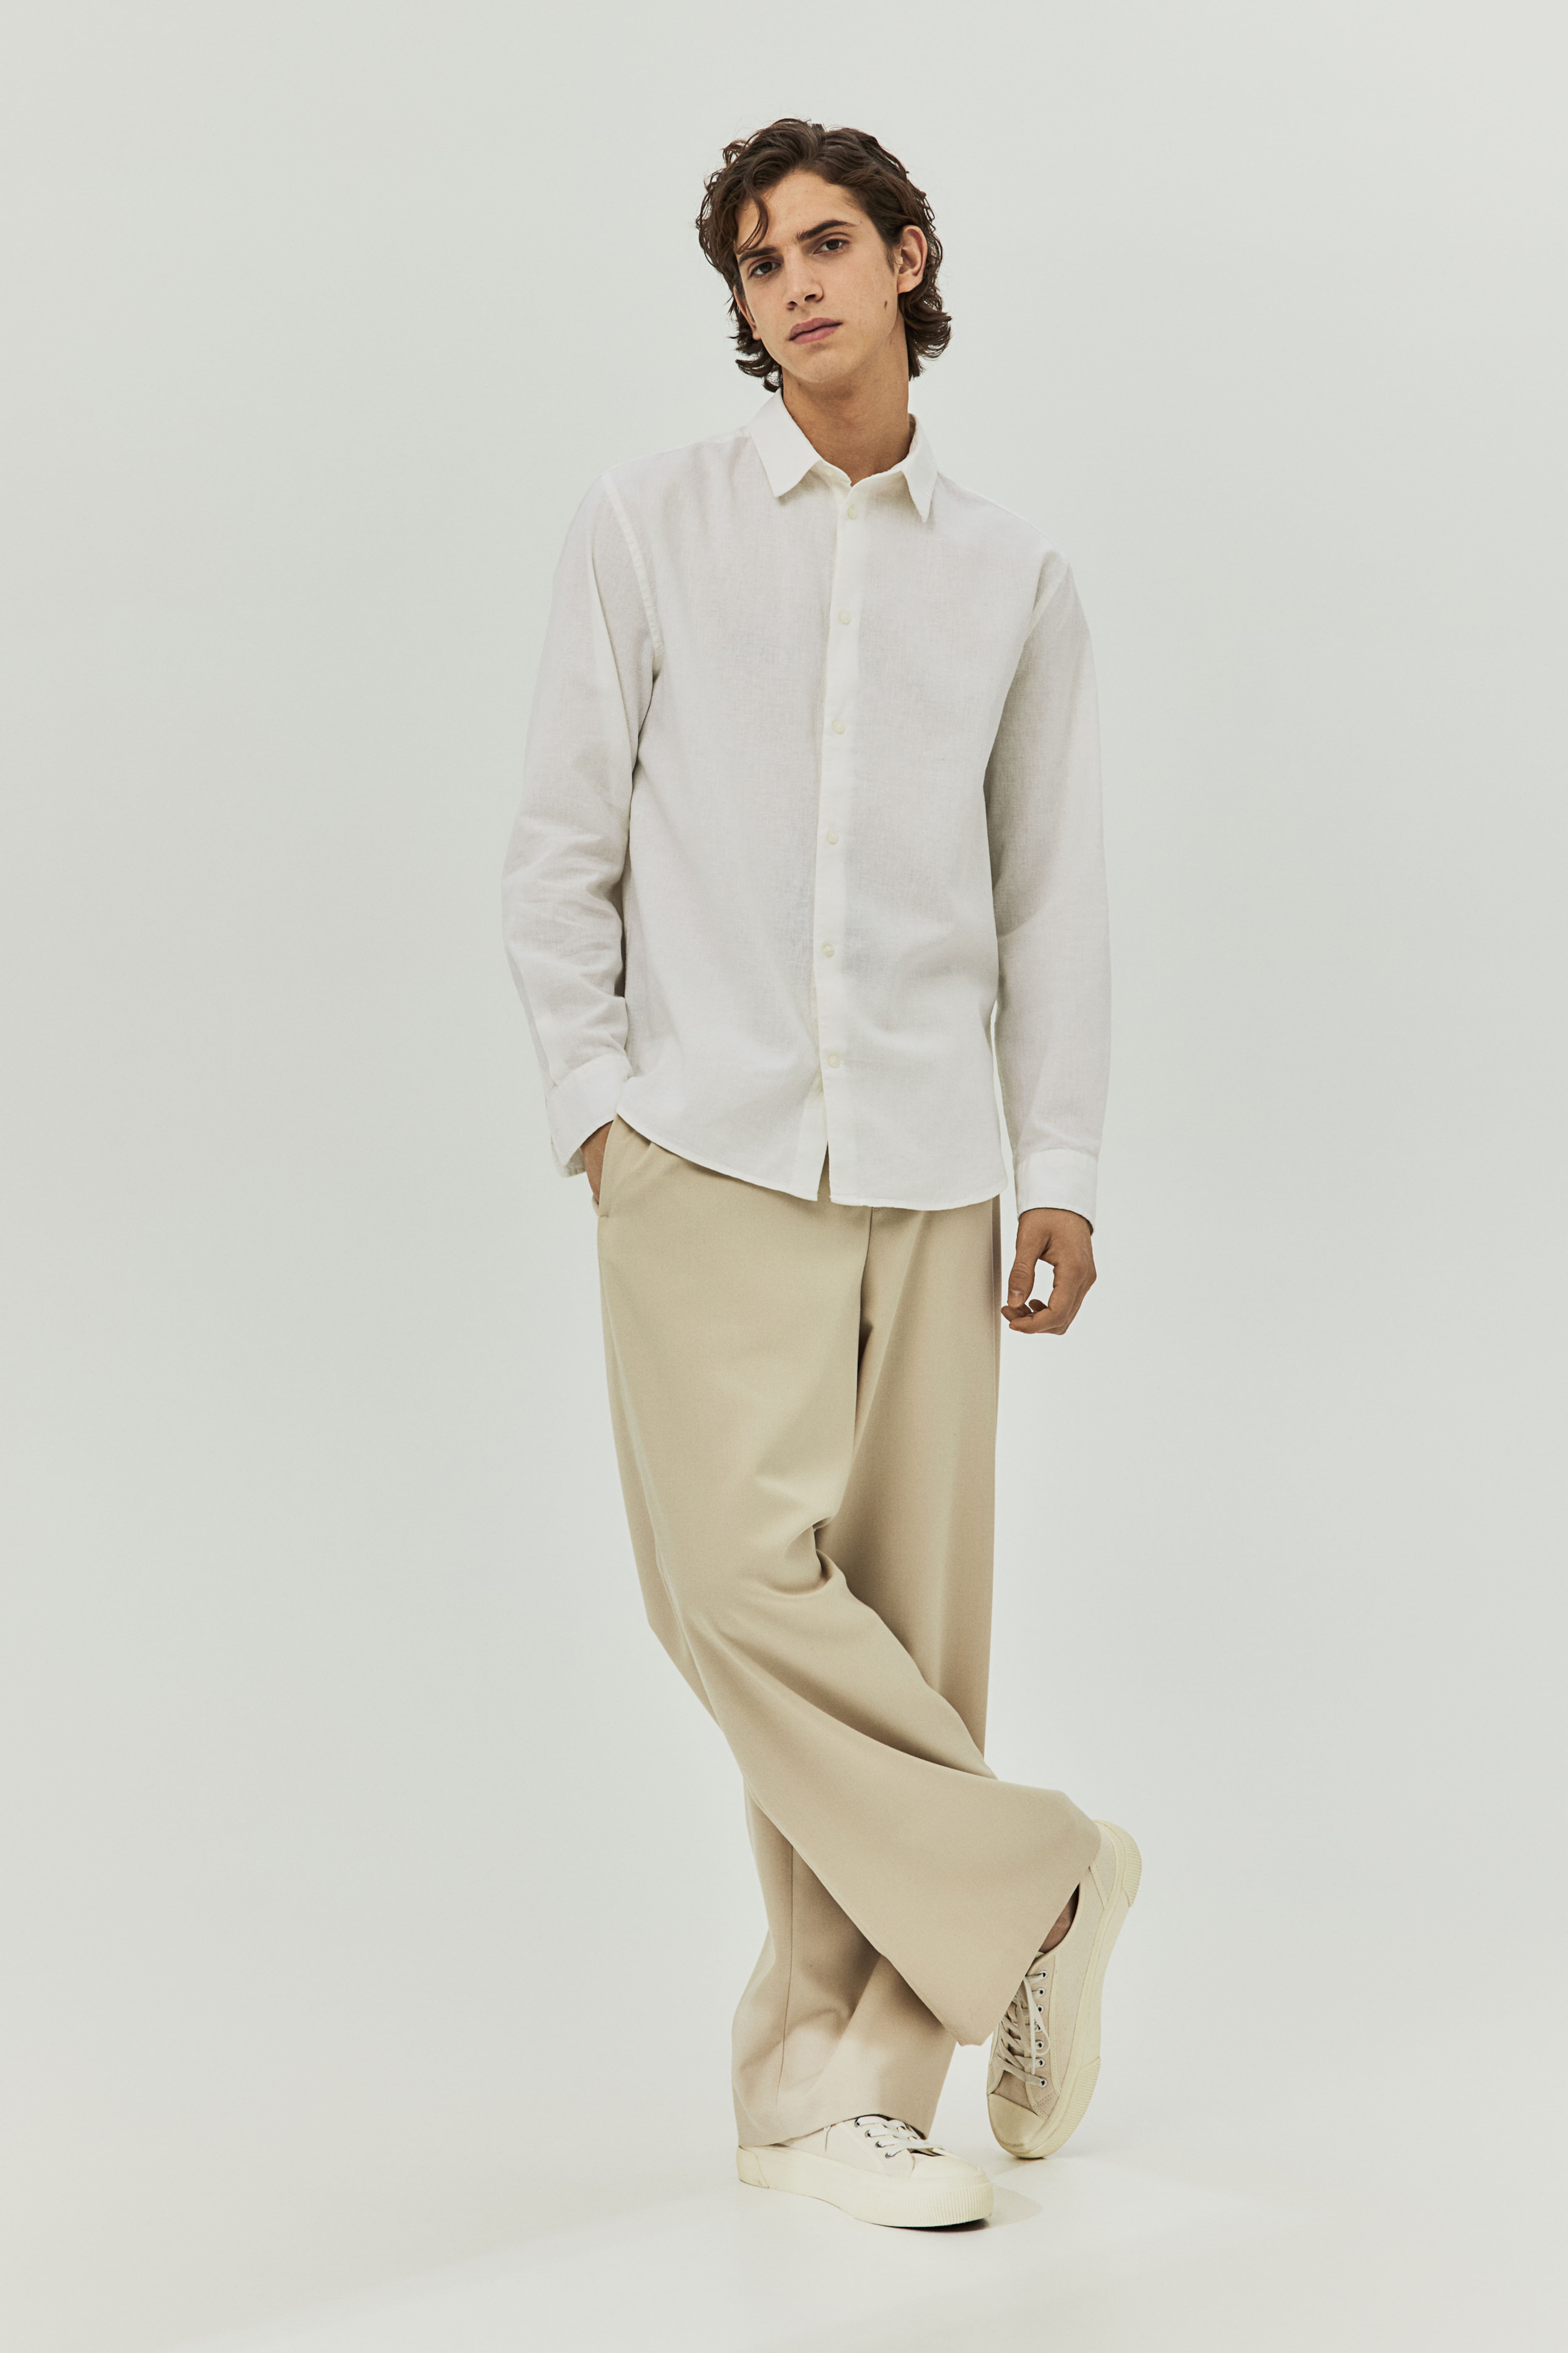 Baby Boys' Gentleman Clothes Sets Bow Tie Shirts + Suspender Pants (White  Shirt + Khaki pants, 5-6 Years) - Walmart.com